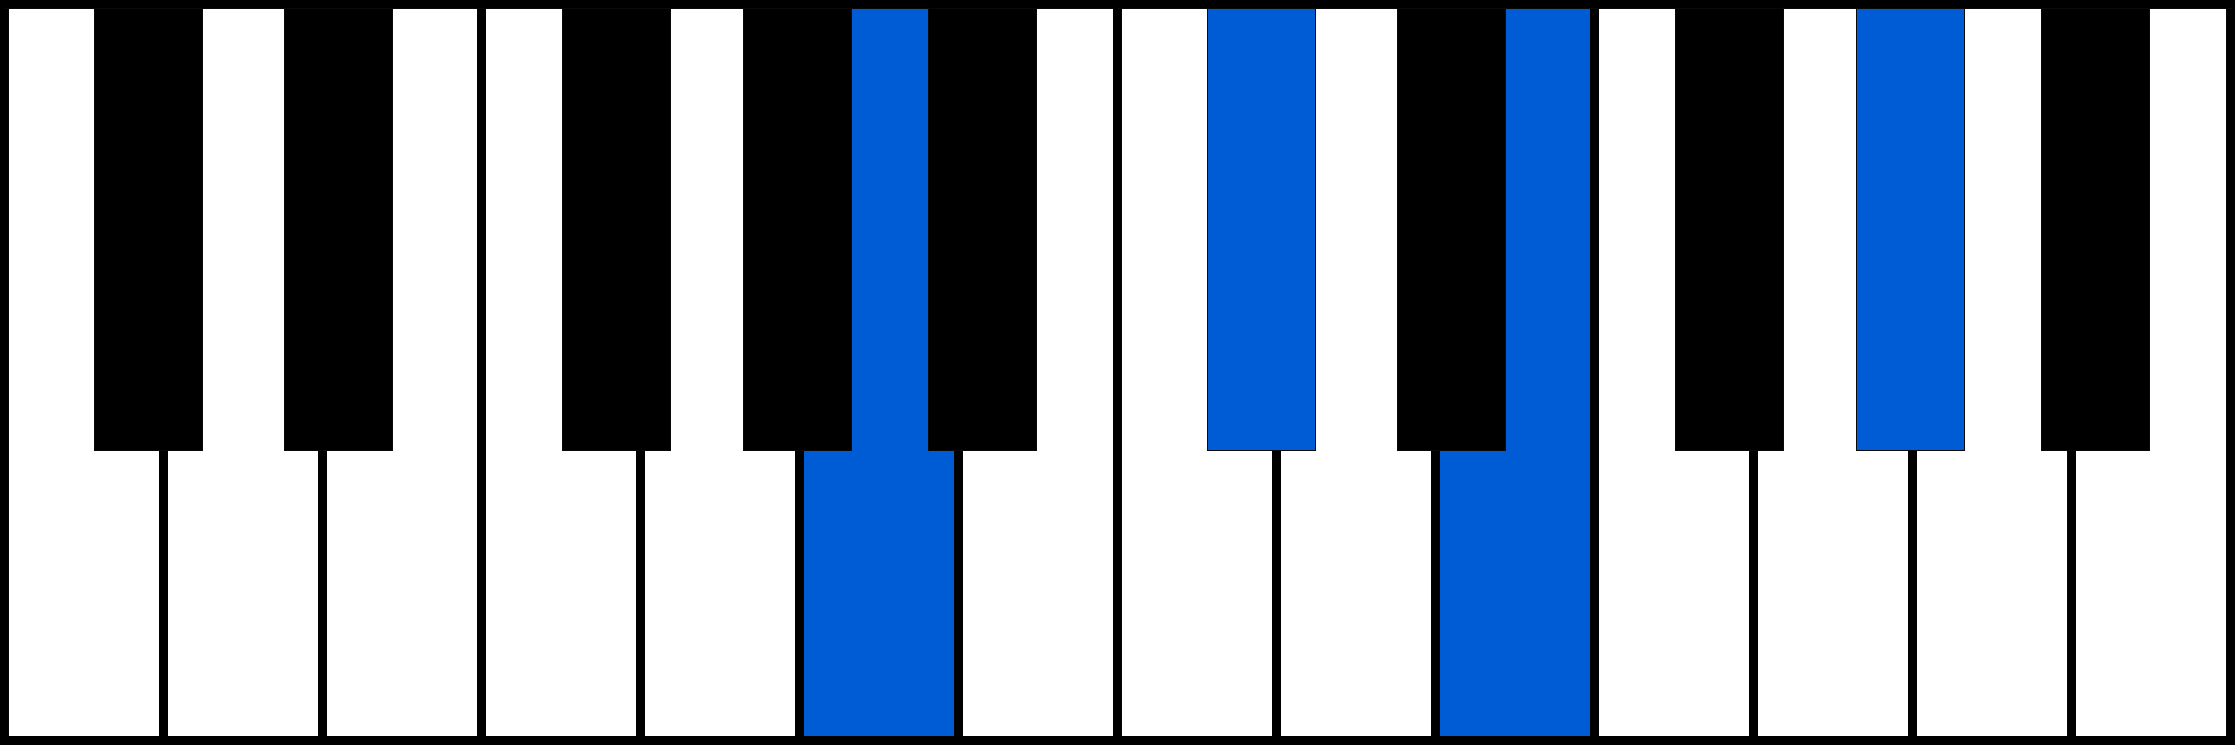 Amaj7 piano chord fingering